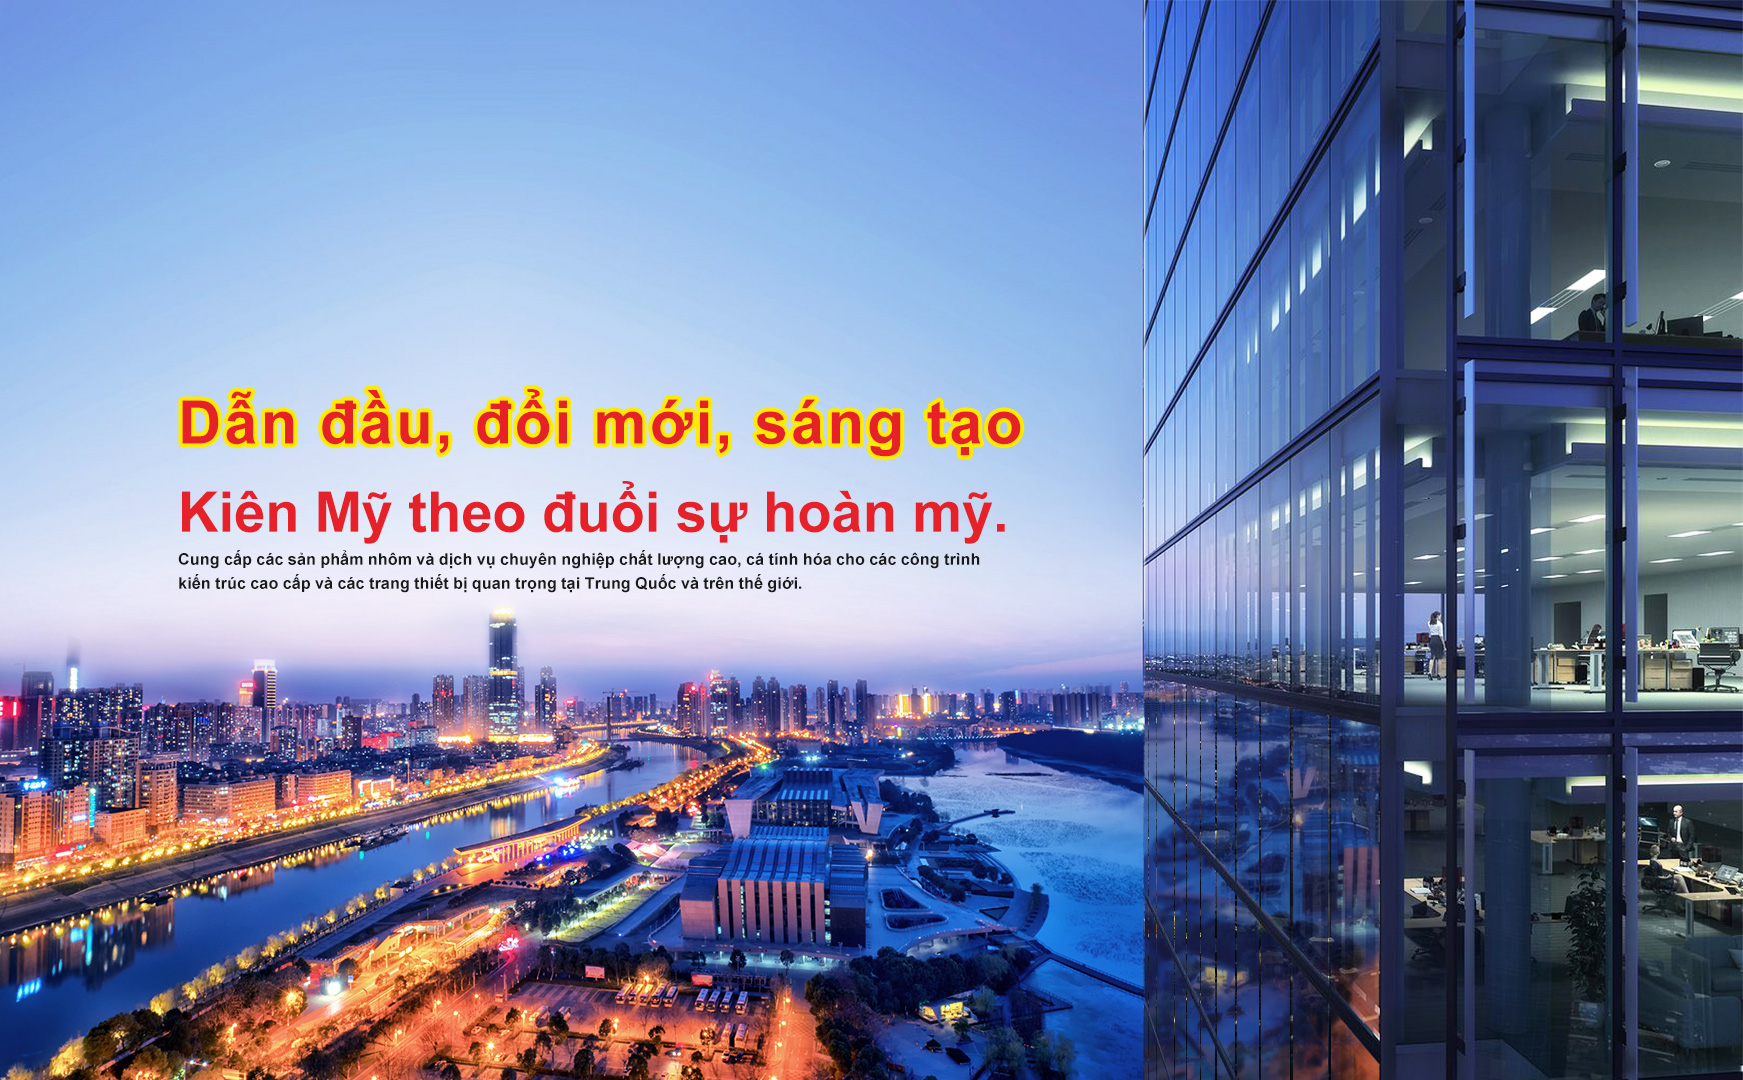 越南PC端首页banner